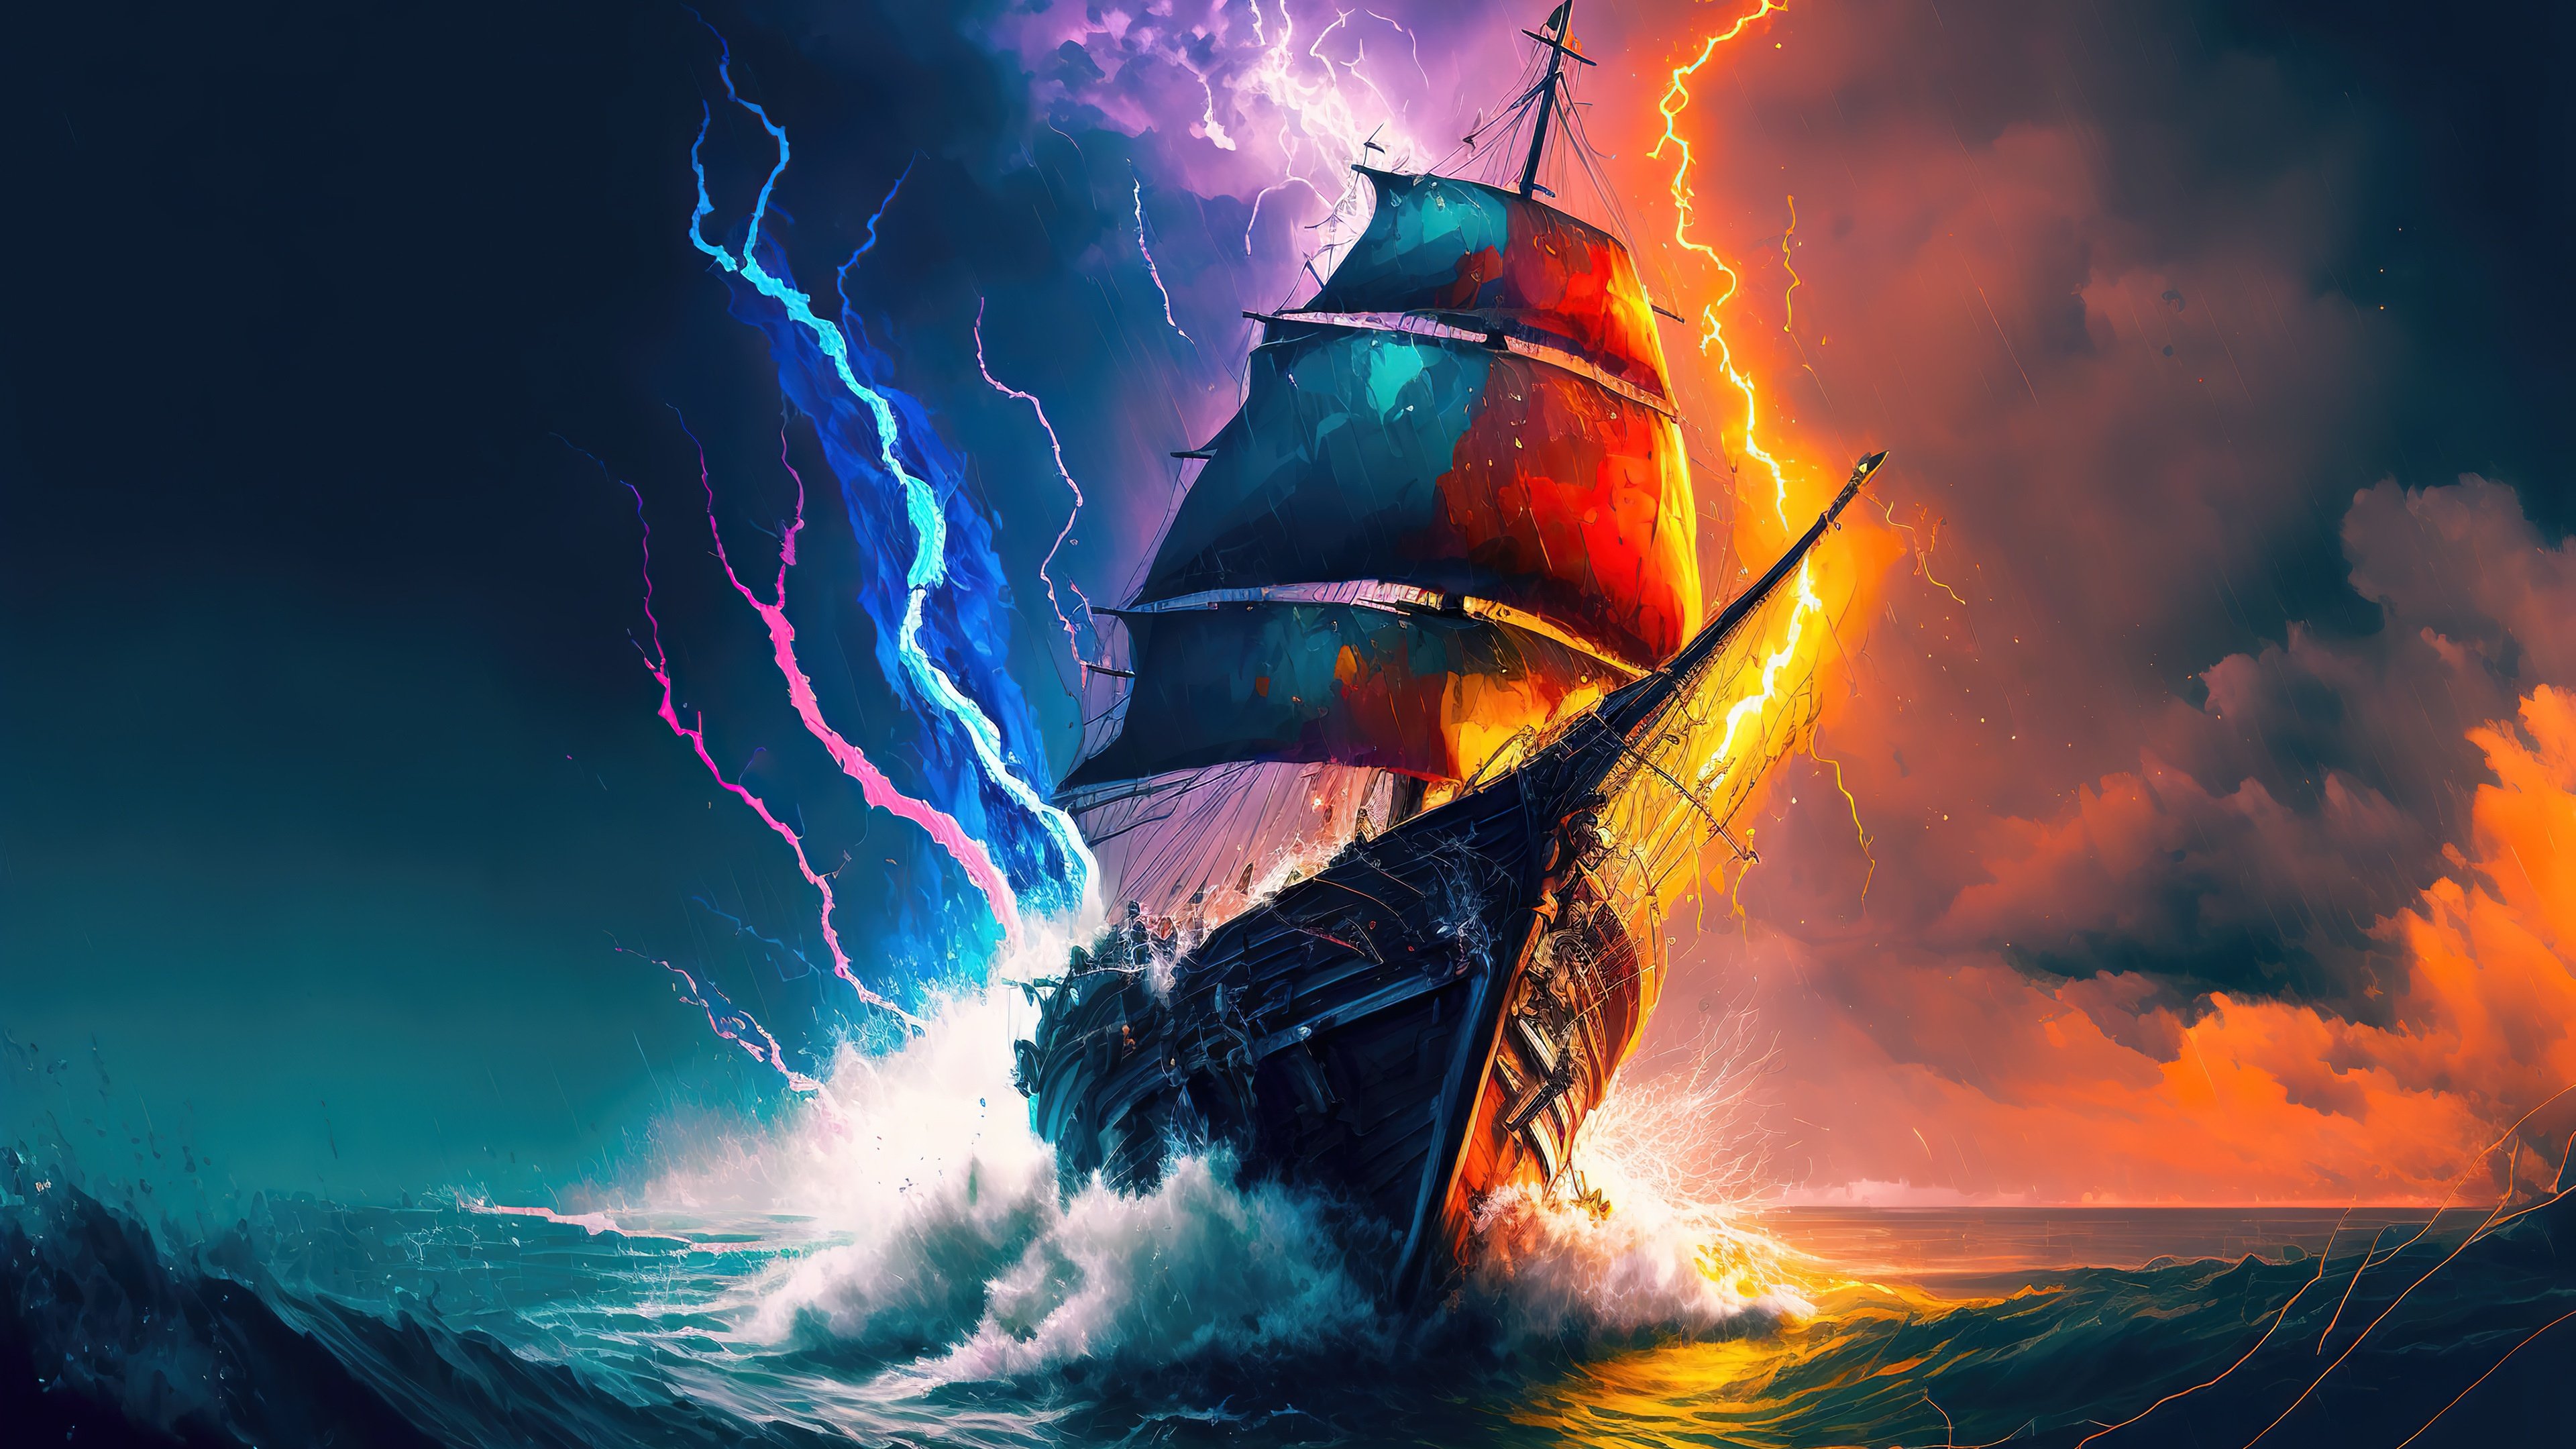 Ship during storm Digital Art Wallpaper 4k Ultra HD ID:11322